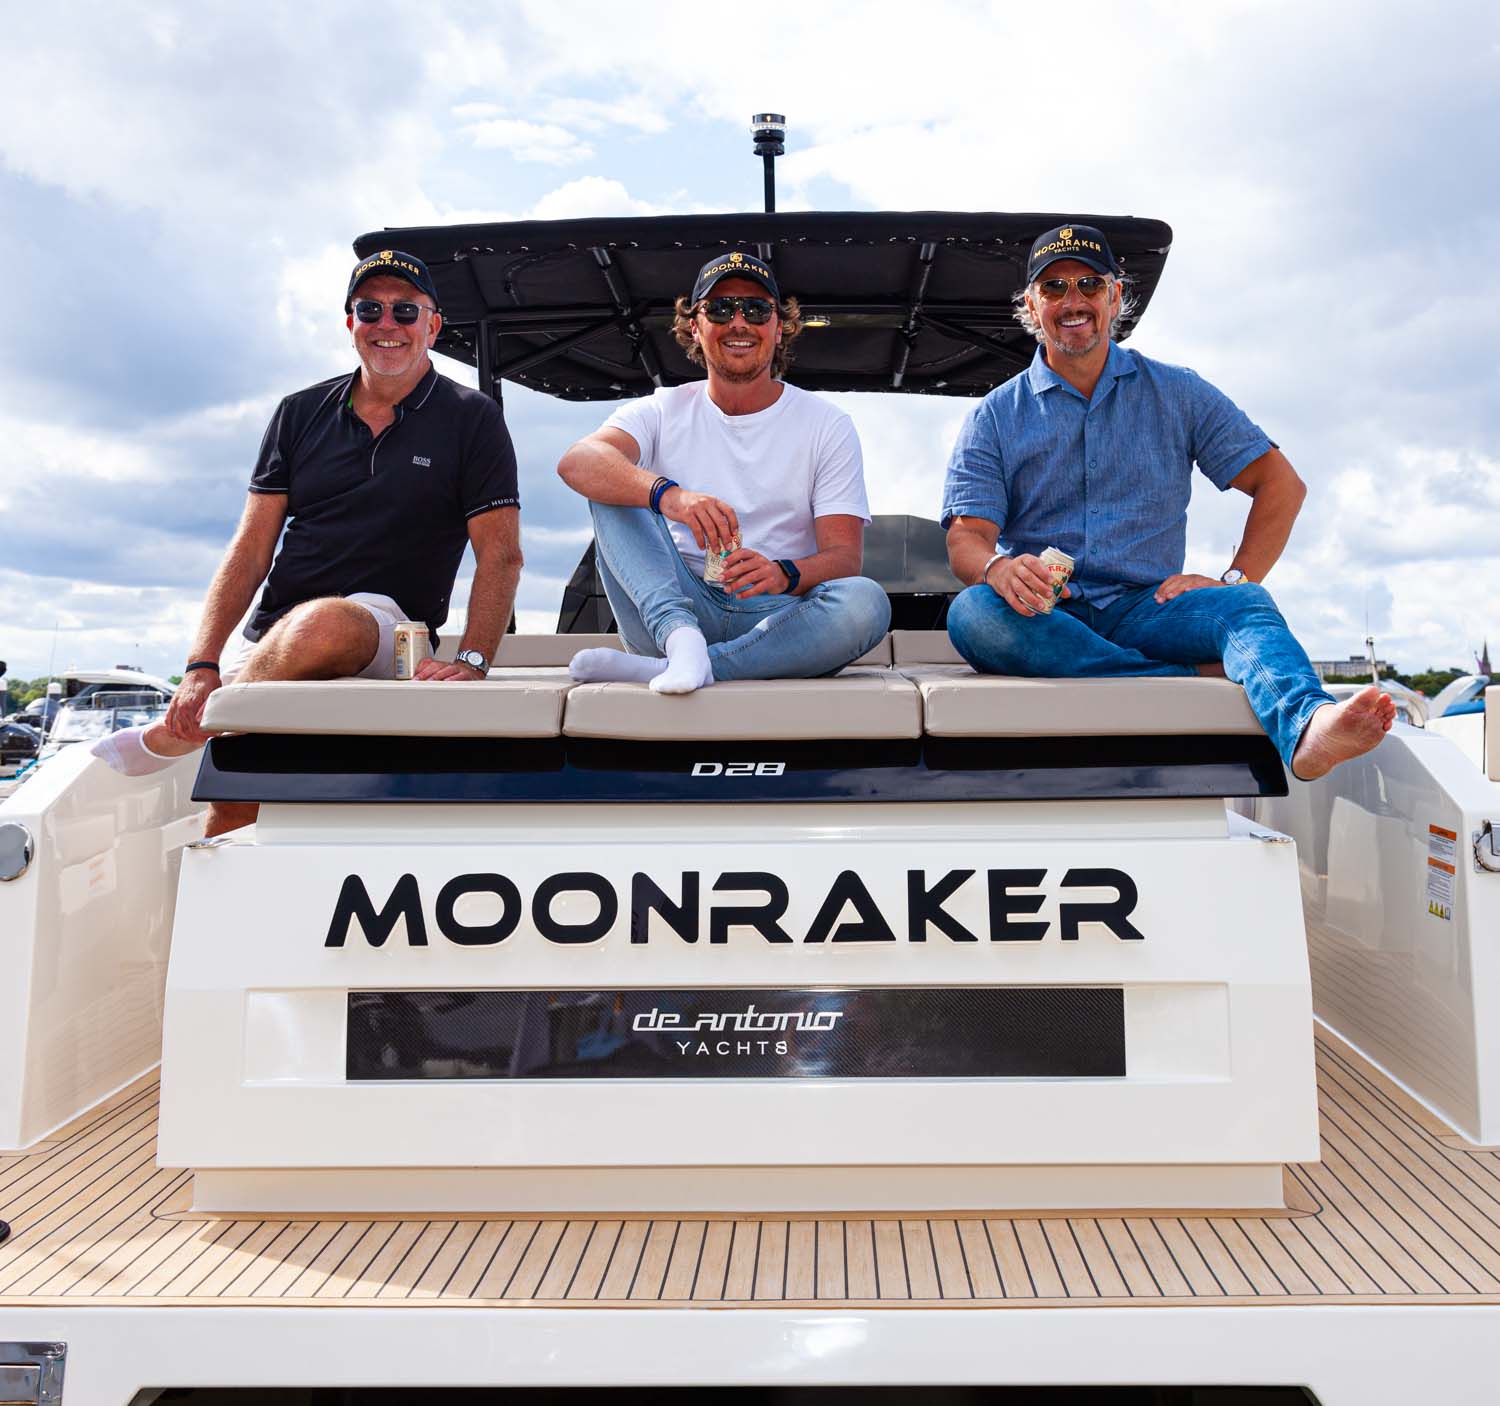 Chris White - Director, Moonraker Yachts